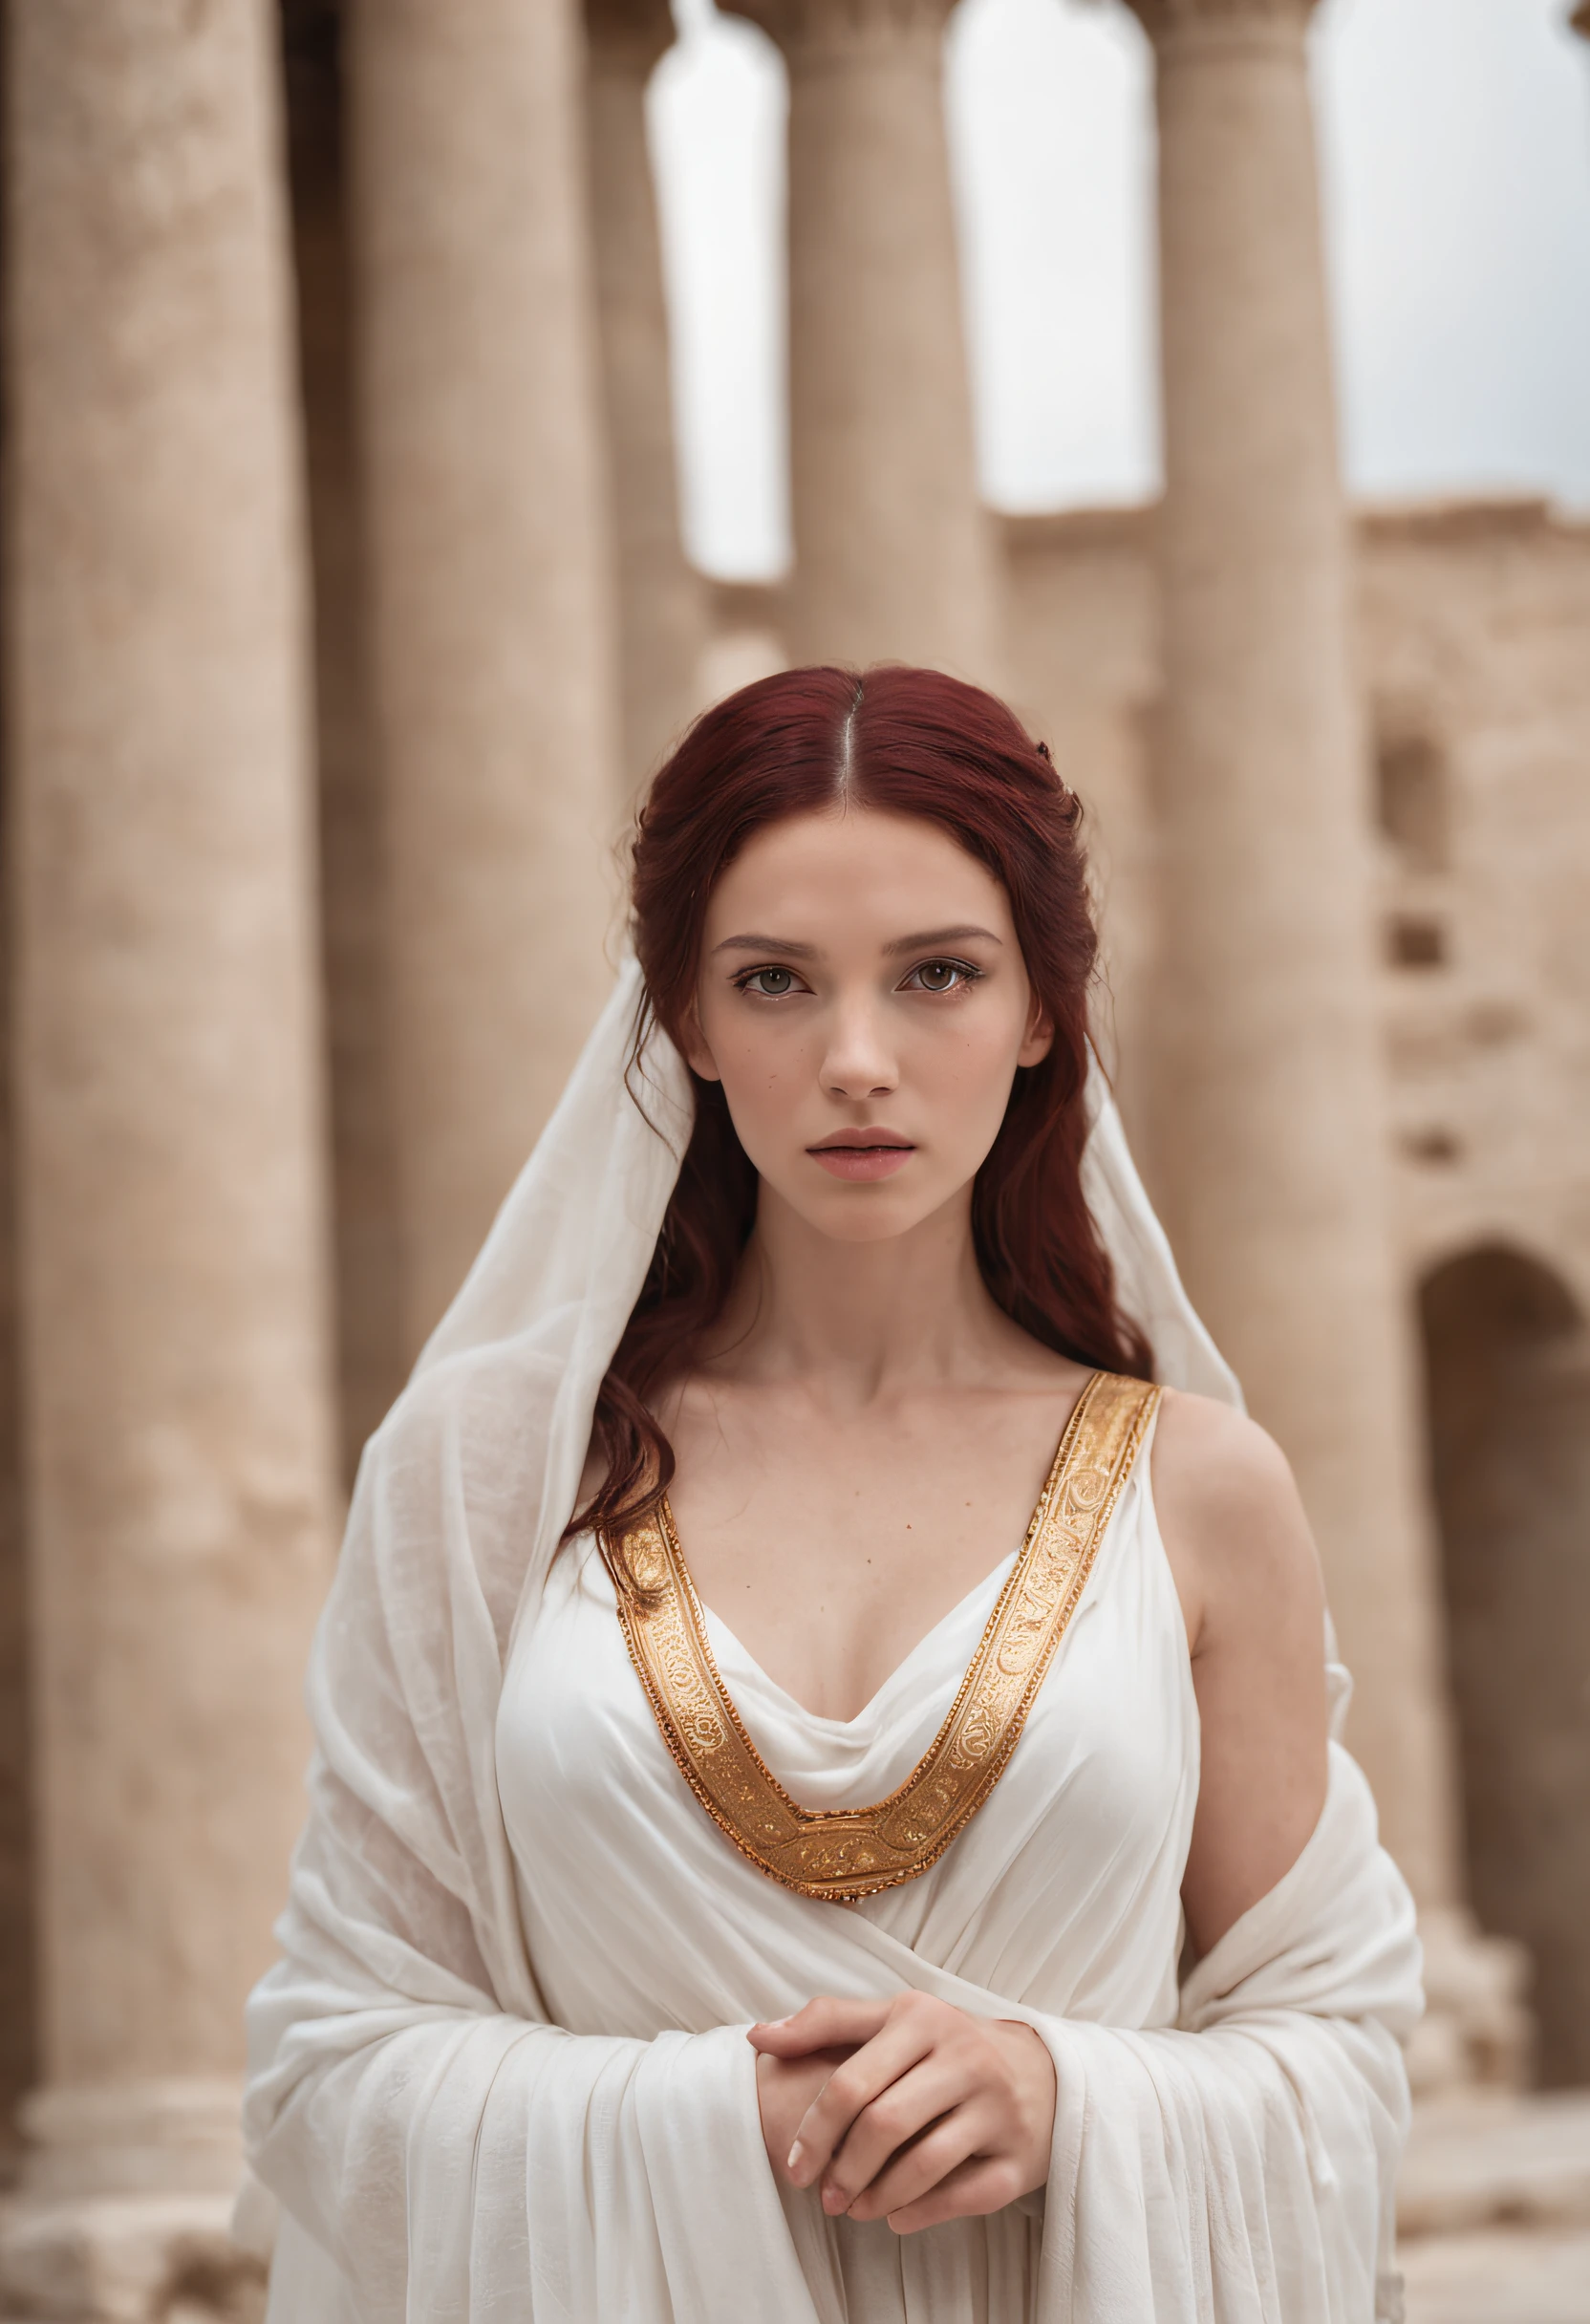 Greek goddess of hearth และ fire, กับ ((ผมสีแดงเข้ม)) และ ((ดวงตาสีแดงเข้ม)), มีผิวขาว, wears a long white greek toga และ a white veil, looks mysterious และ beautiful, ภายในวิหารกรีกโบราณ, "ไฟศักดิ์สิทธิ์แห่งเวสต้า", ตำนานเทพเจ้ากรีก, บรรยากาศอันศักดิ์สิทธิ์, เหมือนจริง, คุณภาพสูงสุด, รายละเอียดสุดยอด, ultra accurate description of hและs, ผลงานชิ้นเอก, 8k, เอชดีอาร์